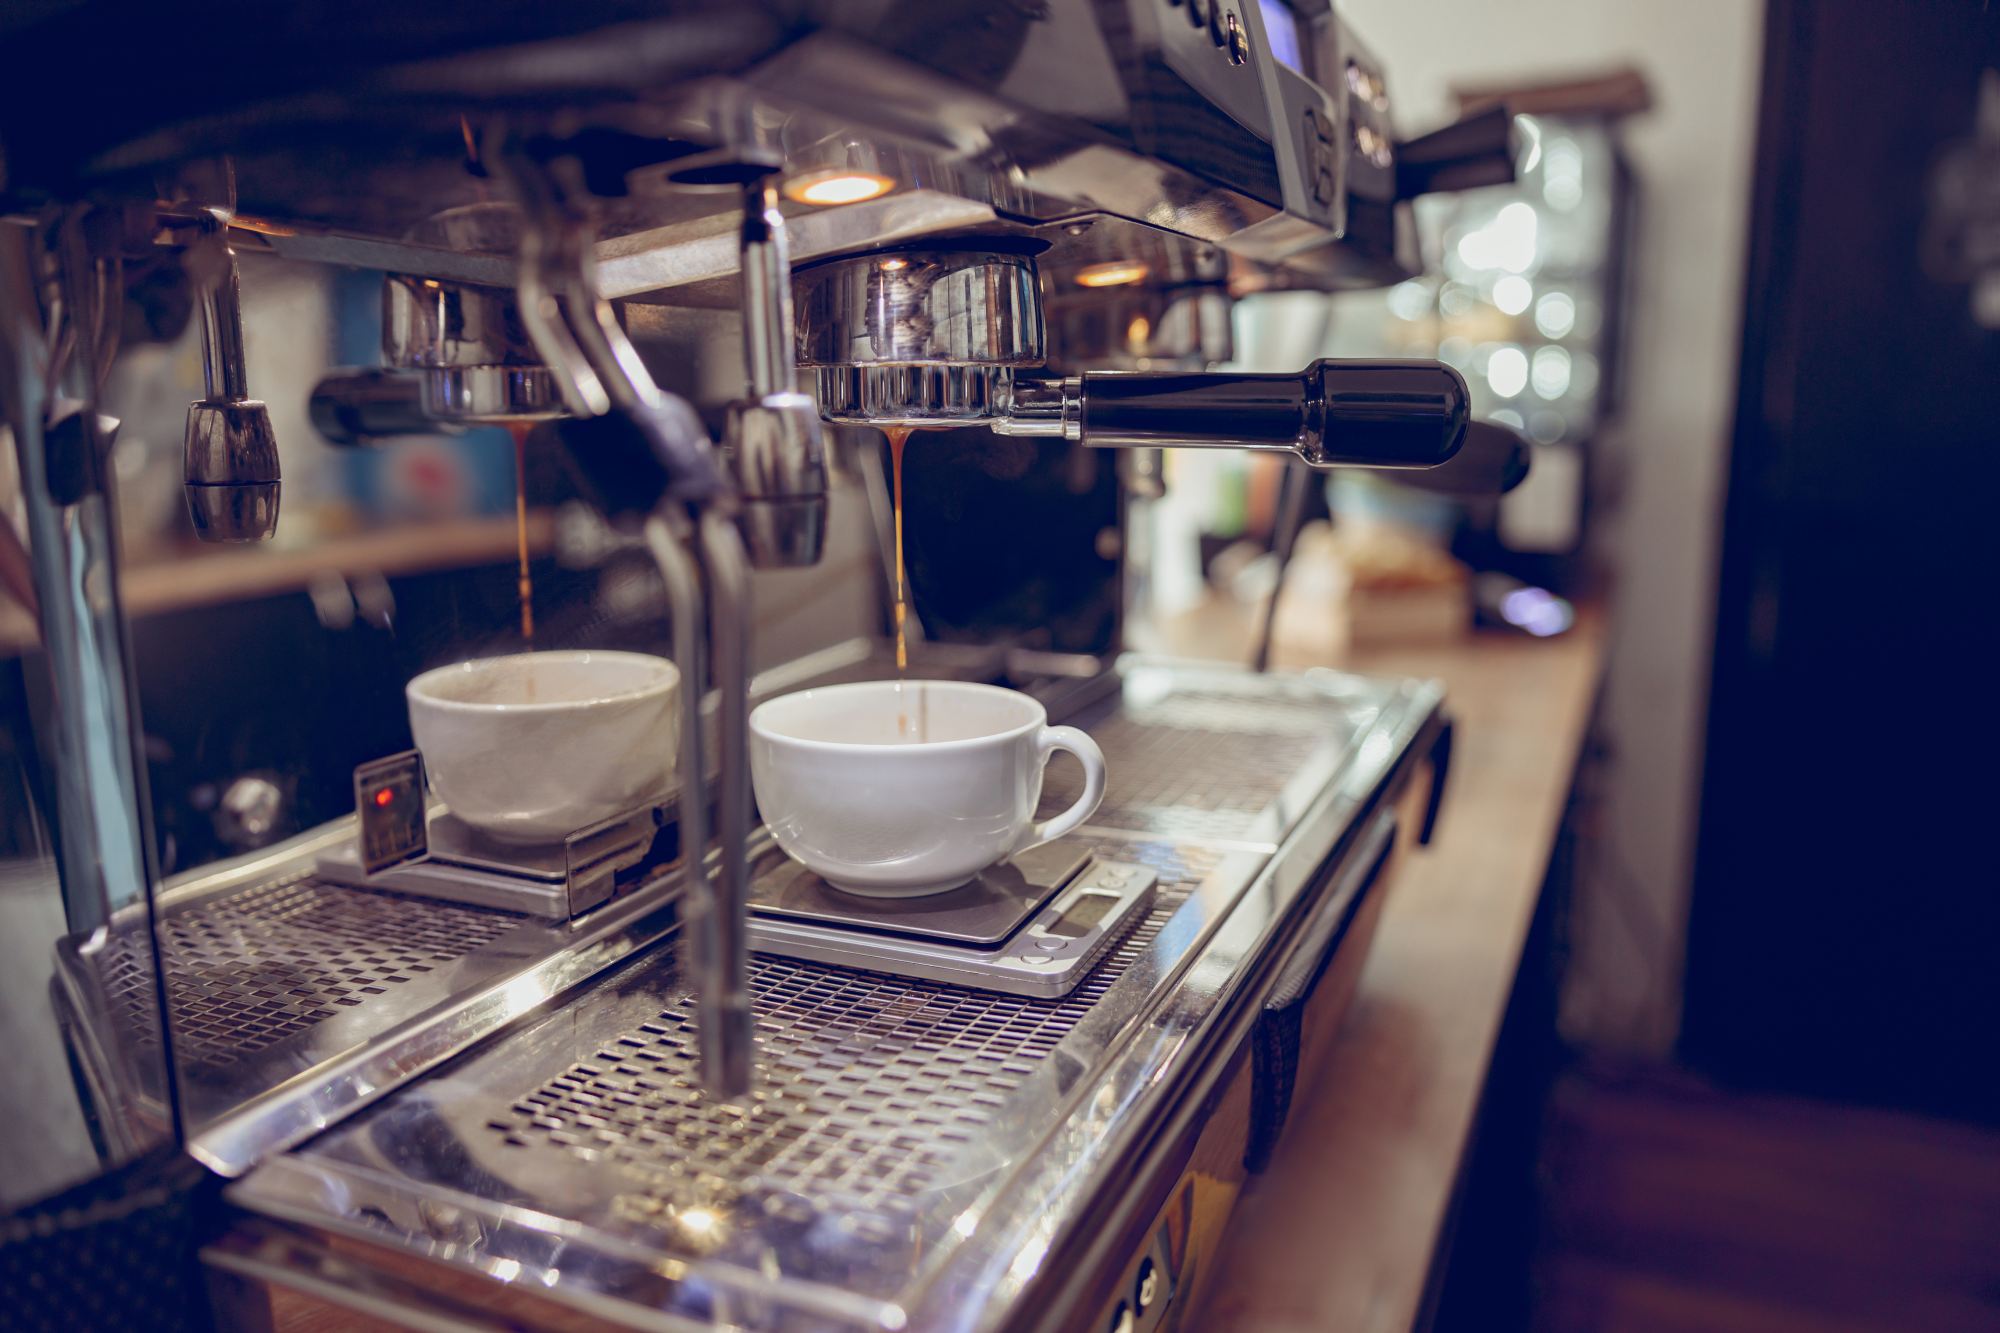 https://denbydalecoffee.co.uk/wp-content/uploads/2023/02/modern-coffee-machine-brewing-espresso-in-cafeteri-2022-02-16-19-55-35-utc-1.jpg